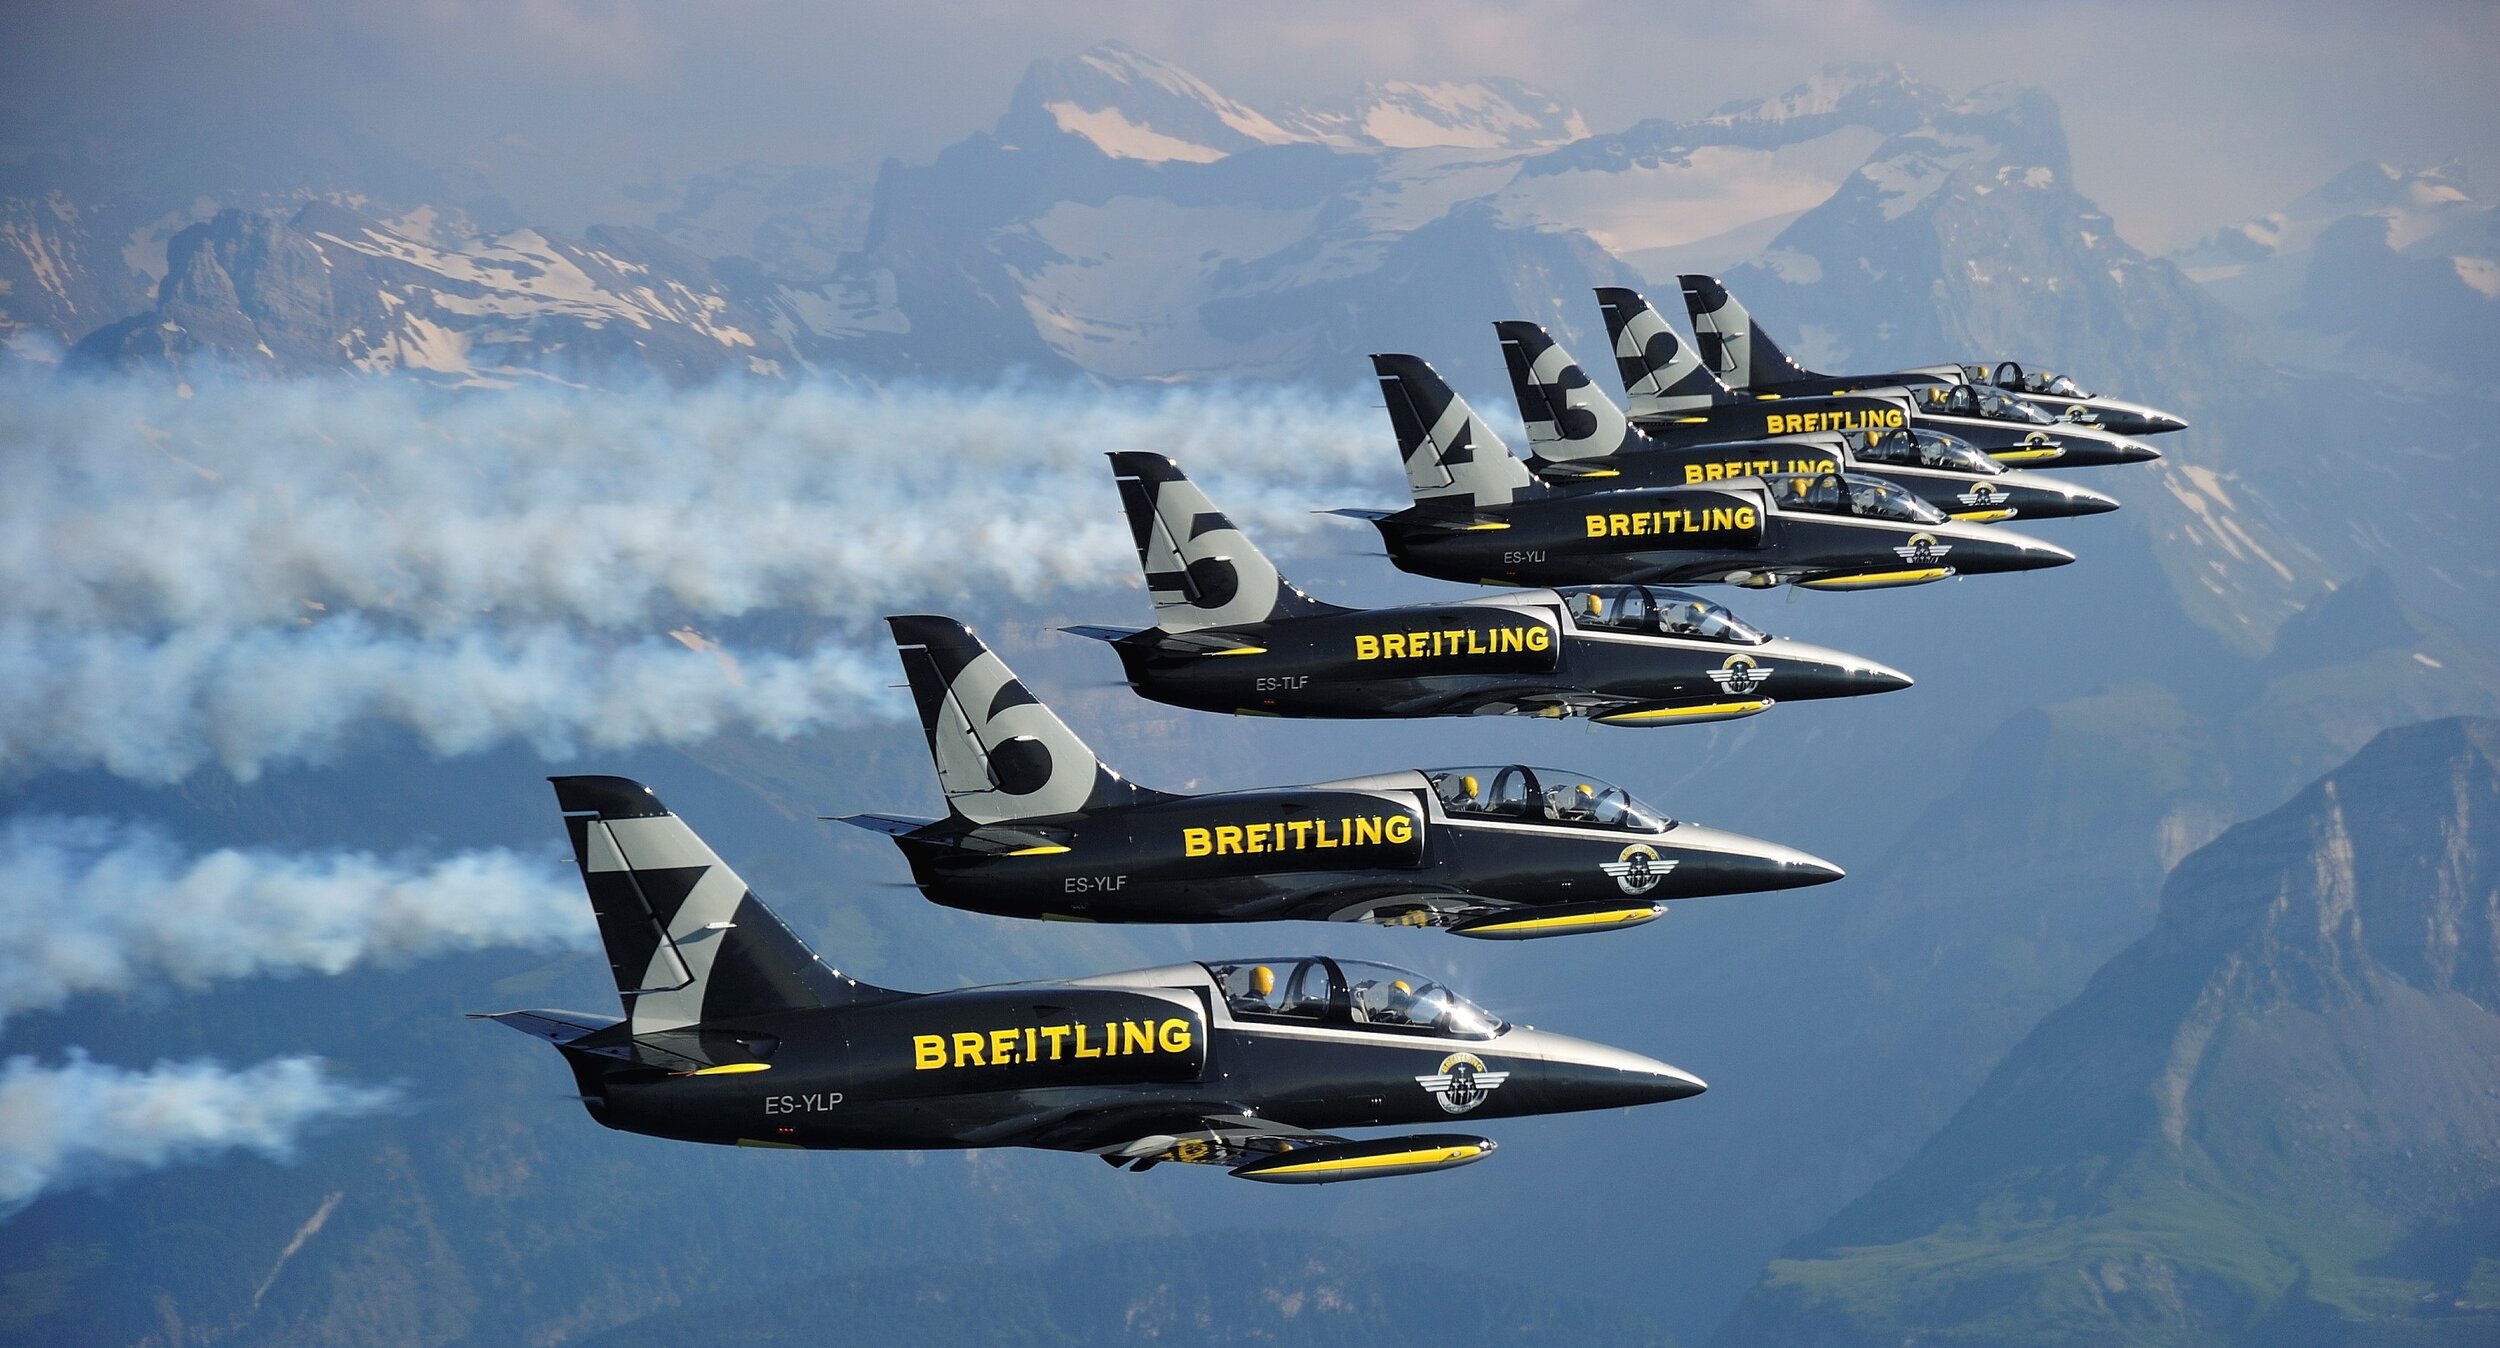 Breitling planes mountain backdrop_no sig.jpg